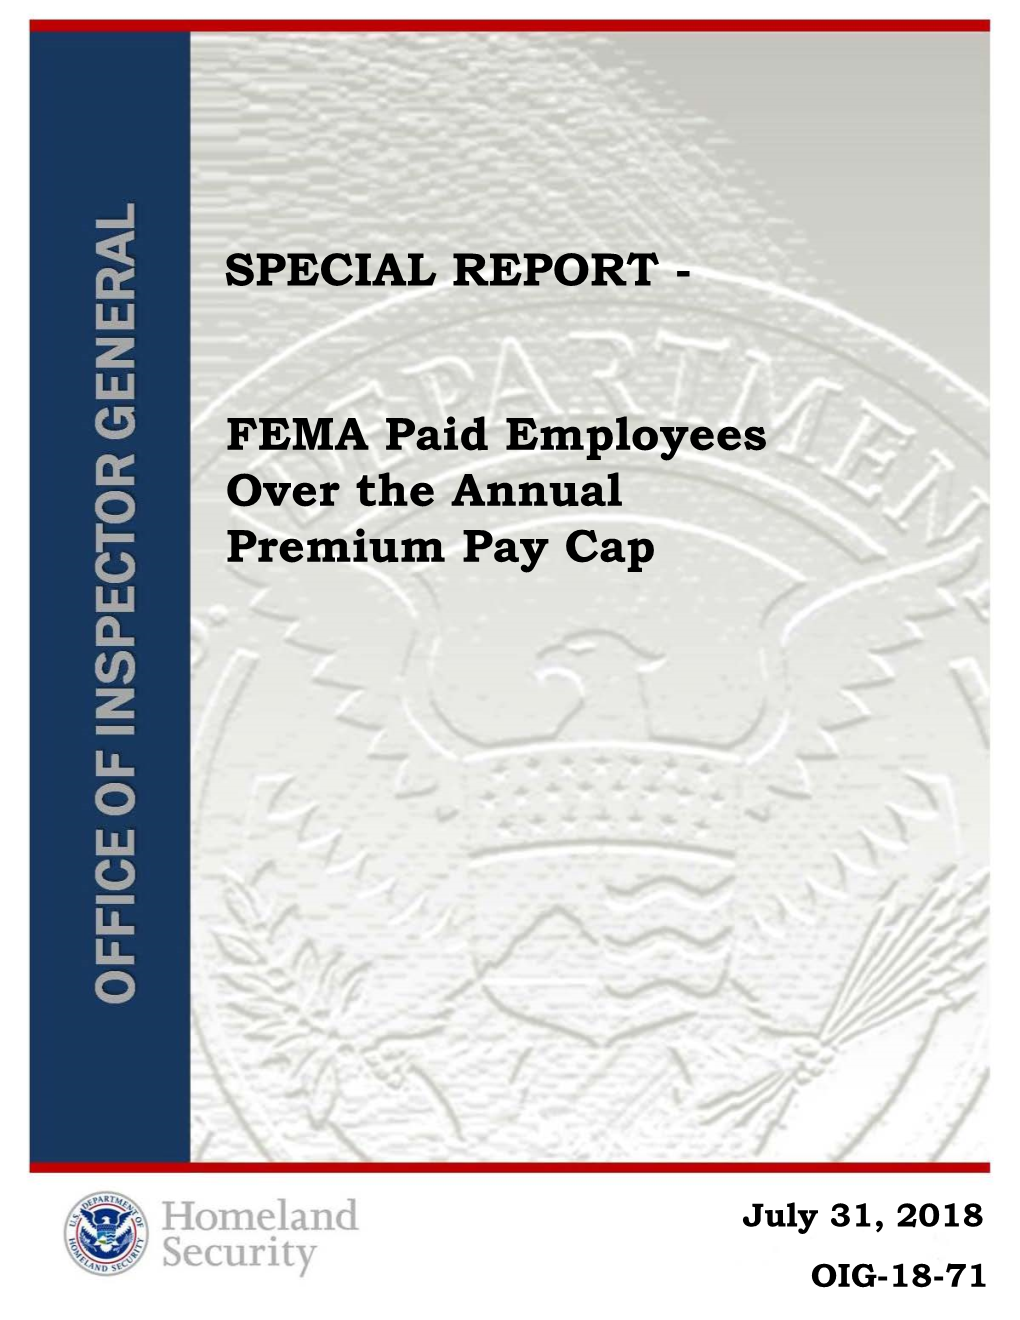 FEMA Paid Employees Over the Annual Premium Pay Cap